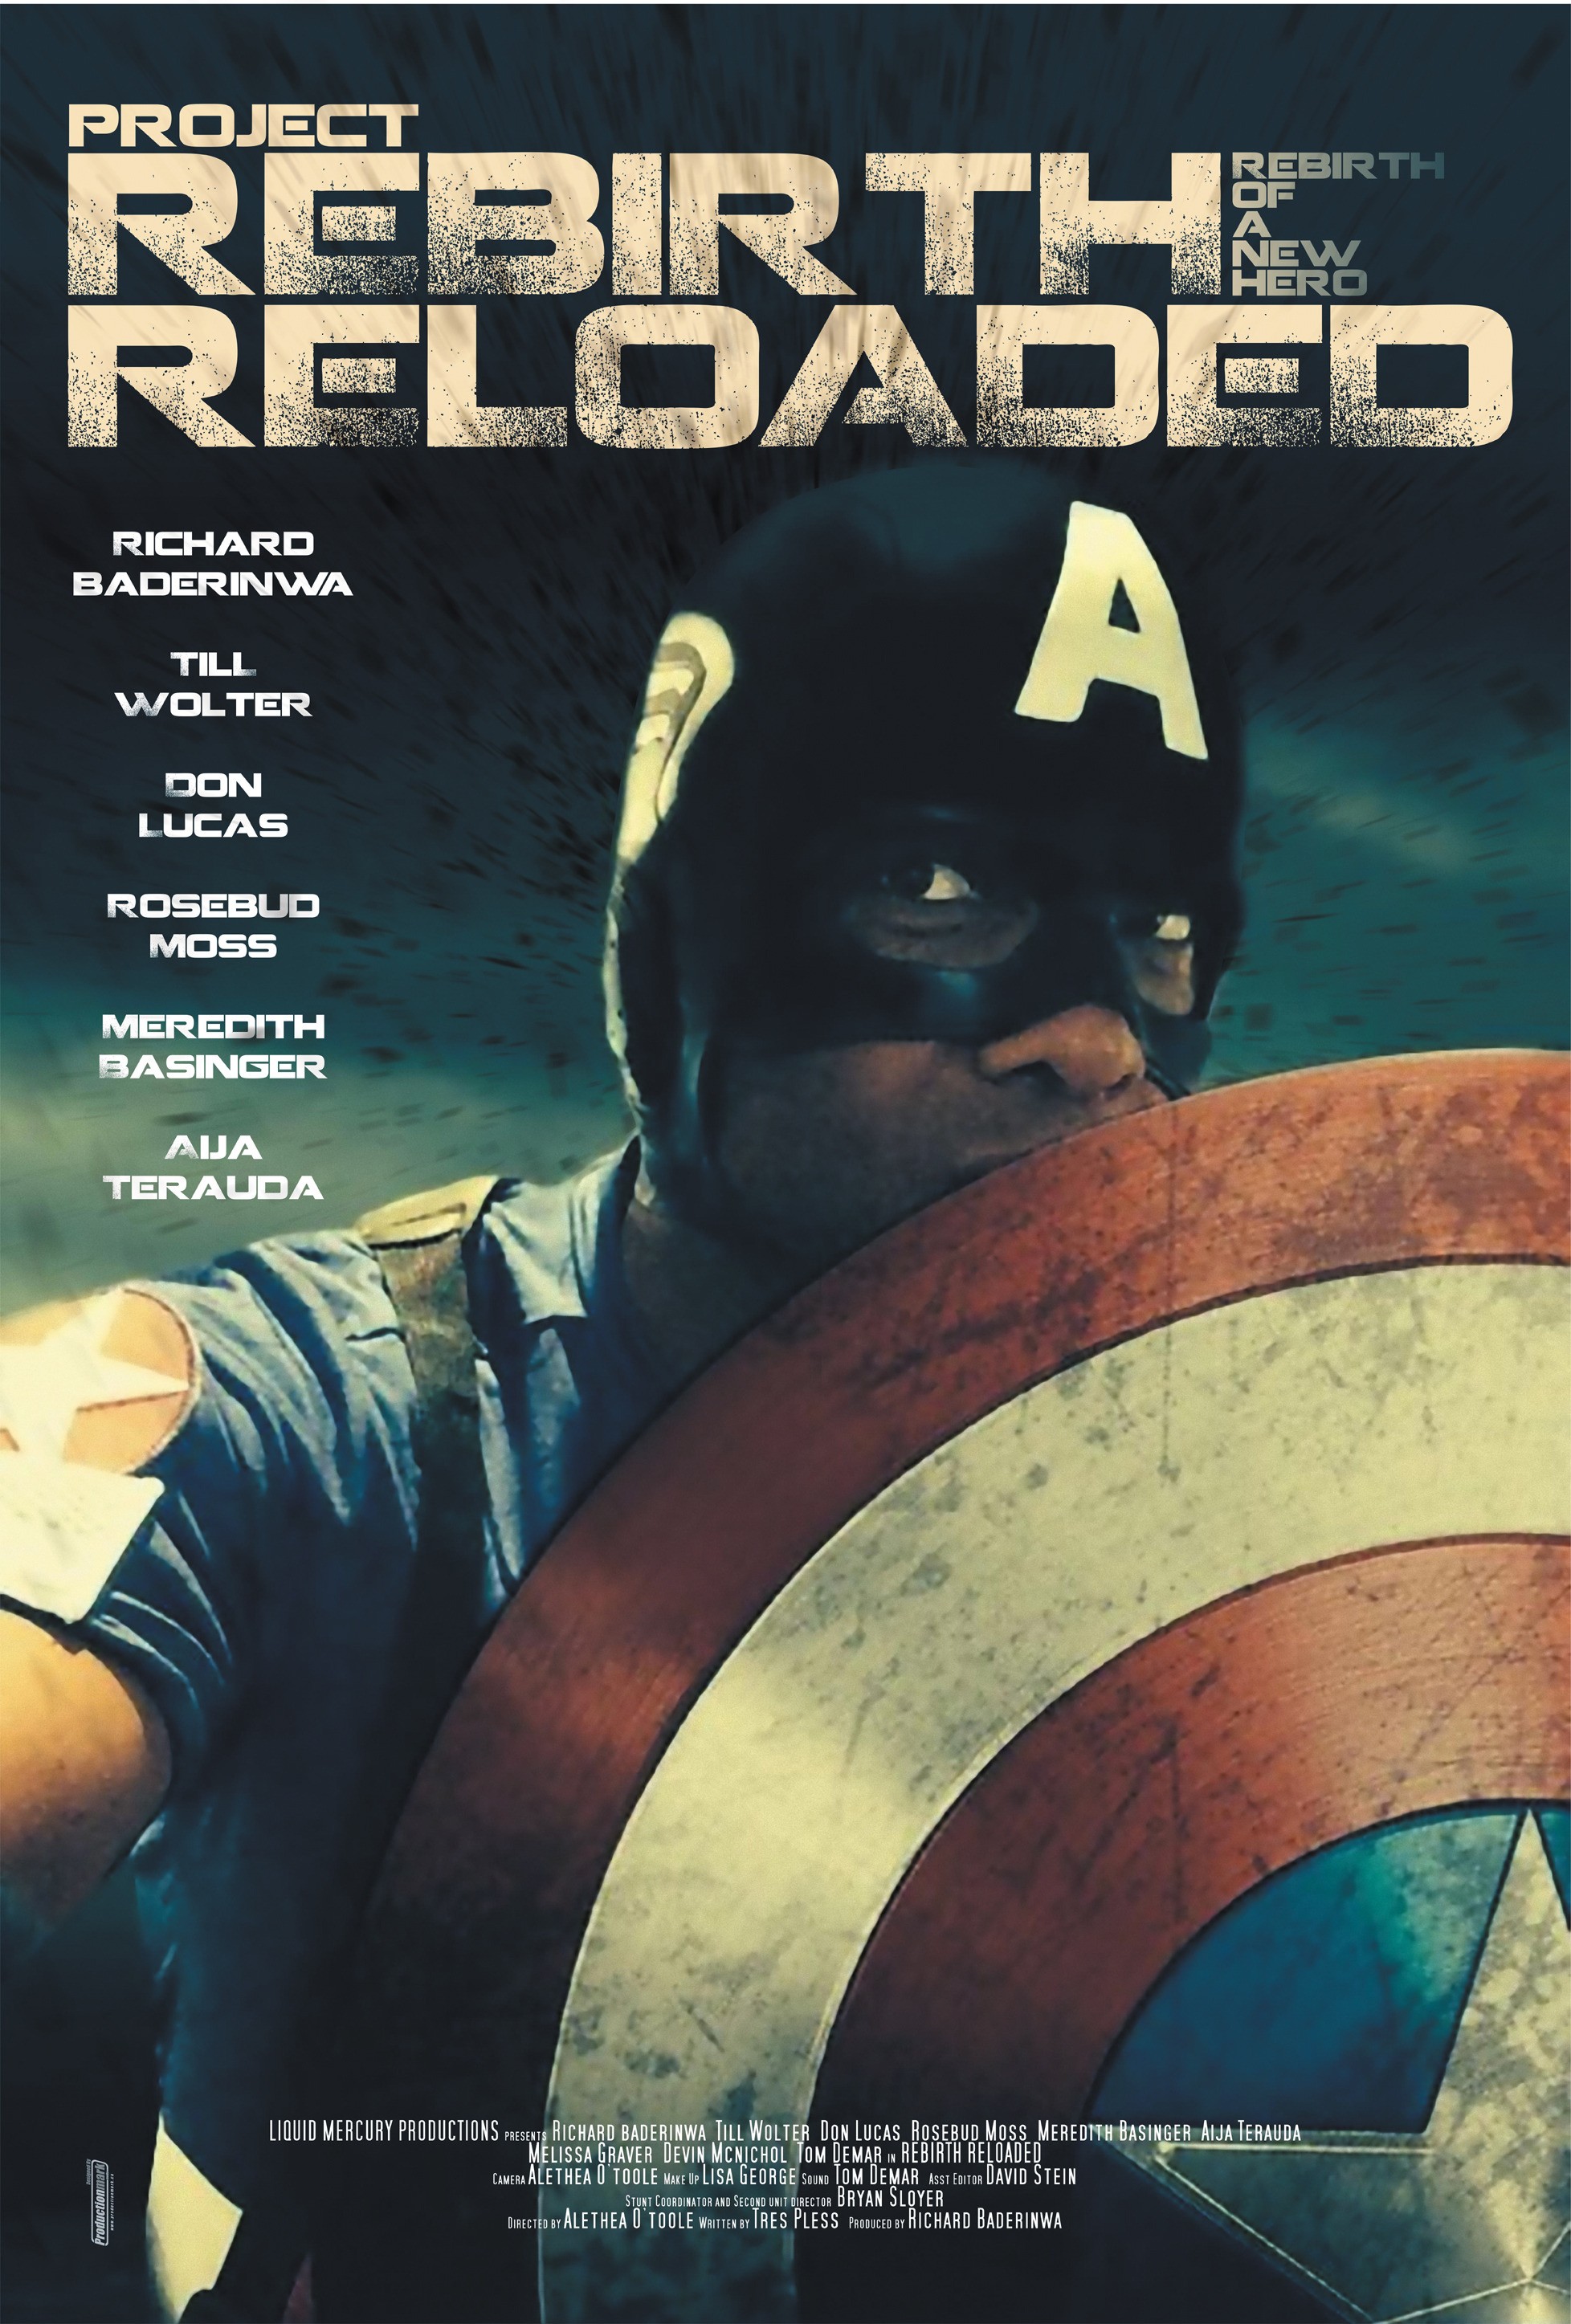 Mega Sized Movie Poster Image for Rebirth Reloaded